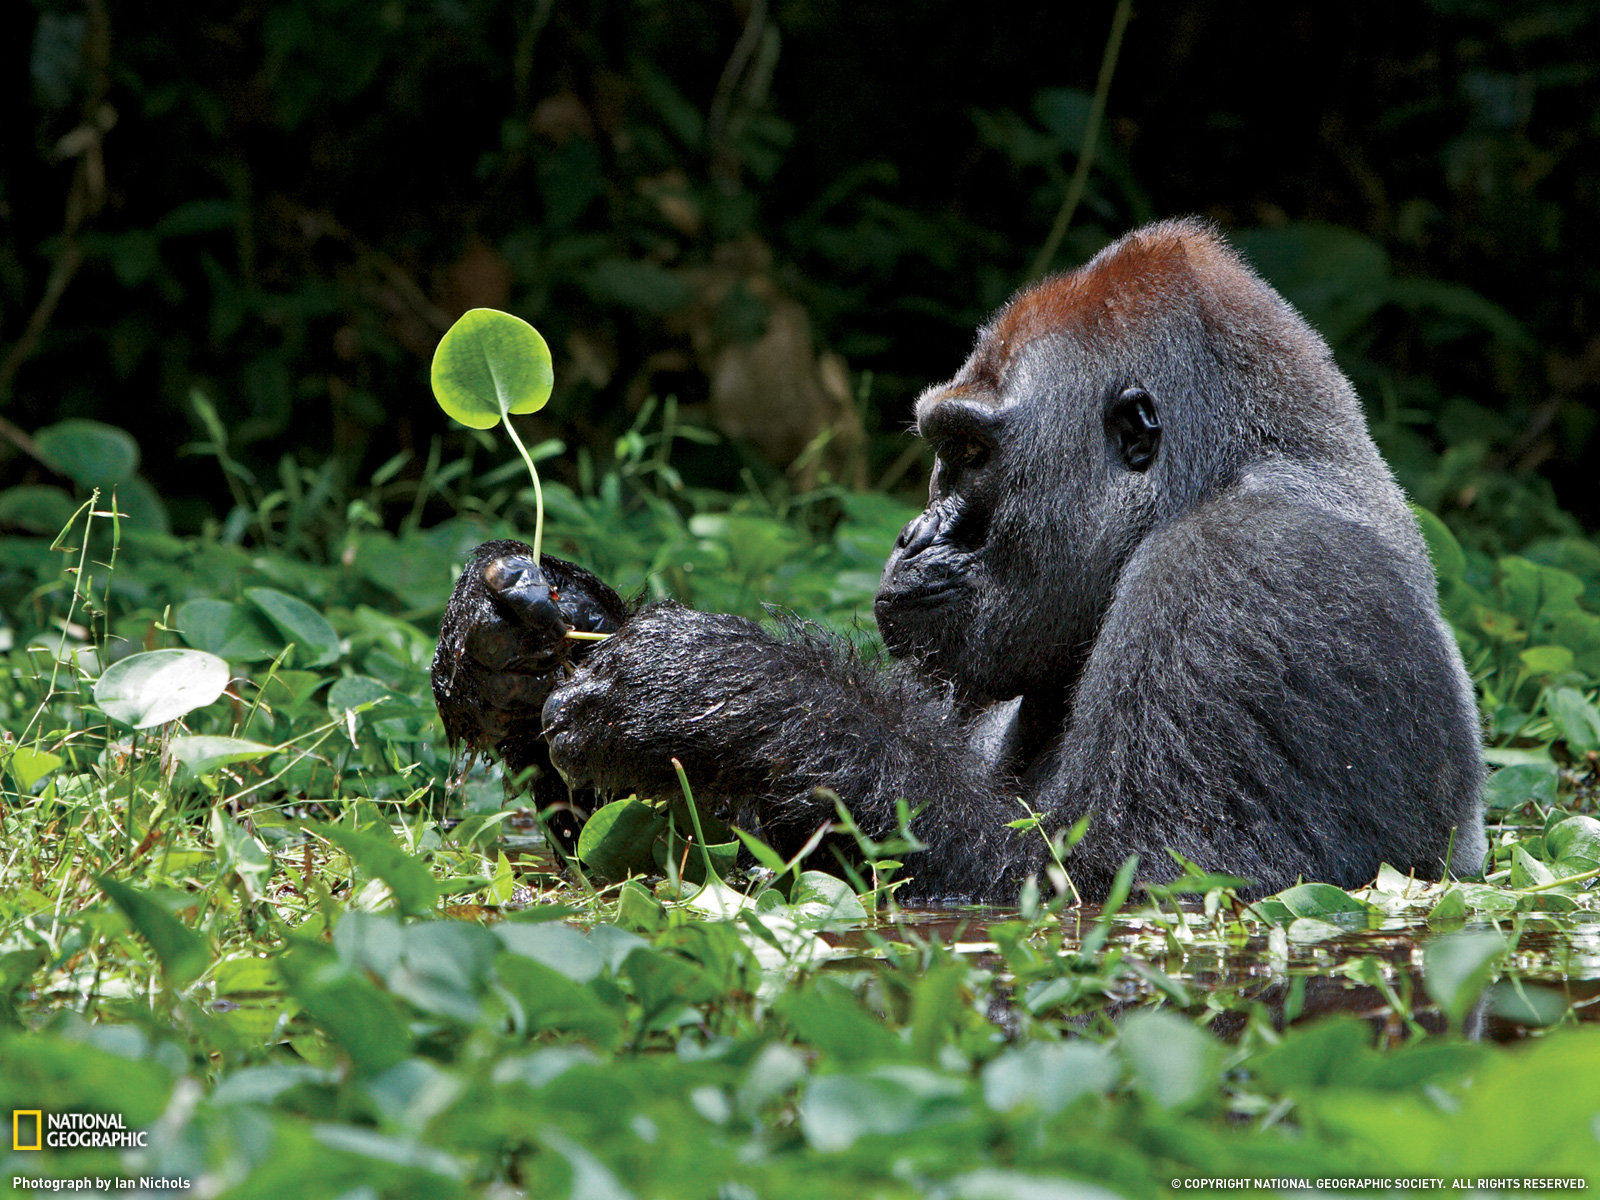 Silverback Gorilla Photo Nature Wallpaper National Geographic